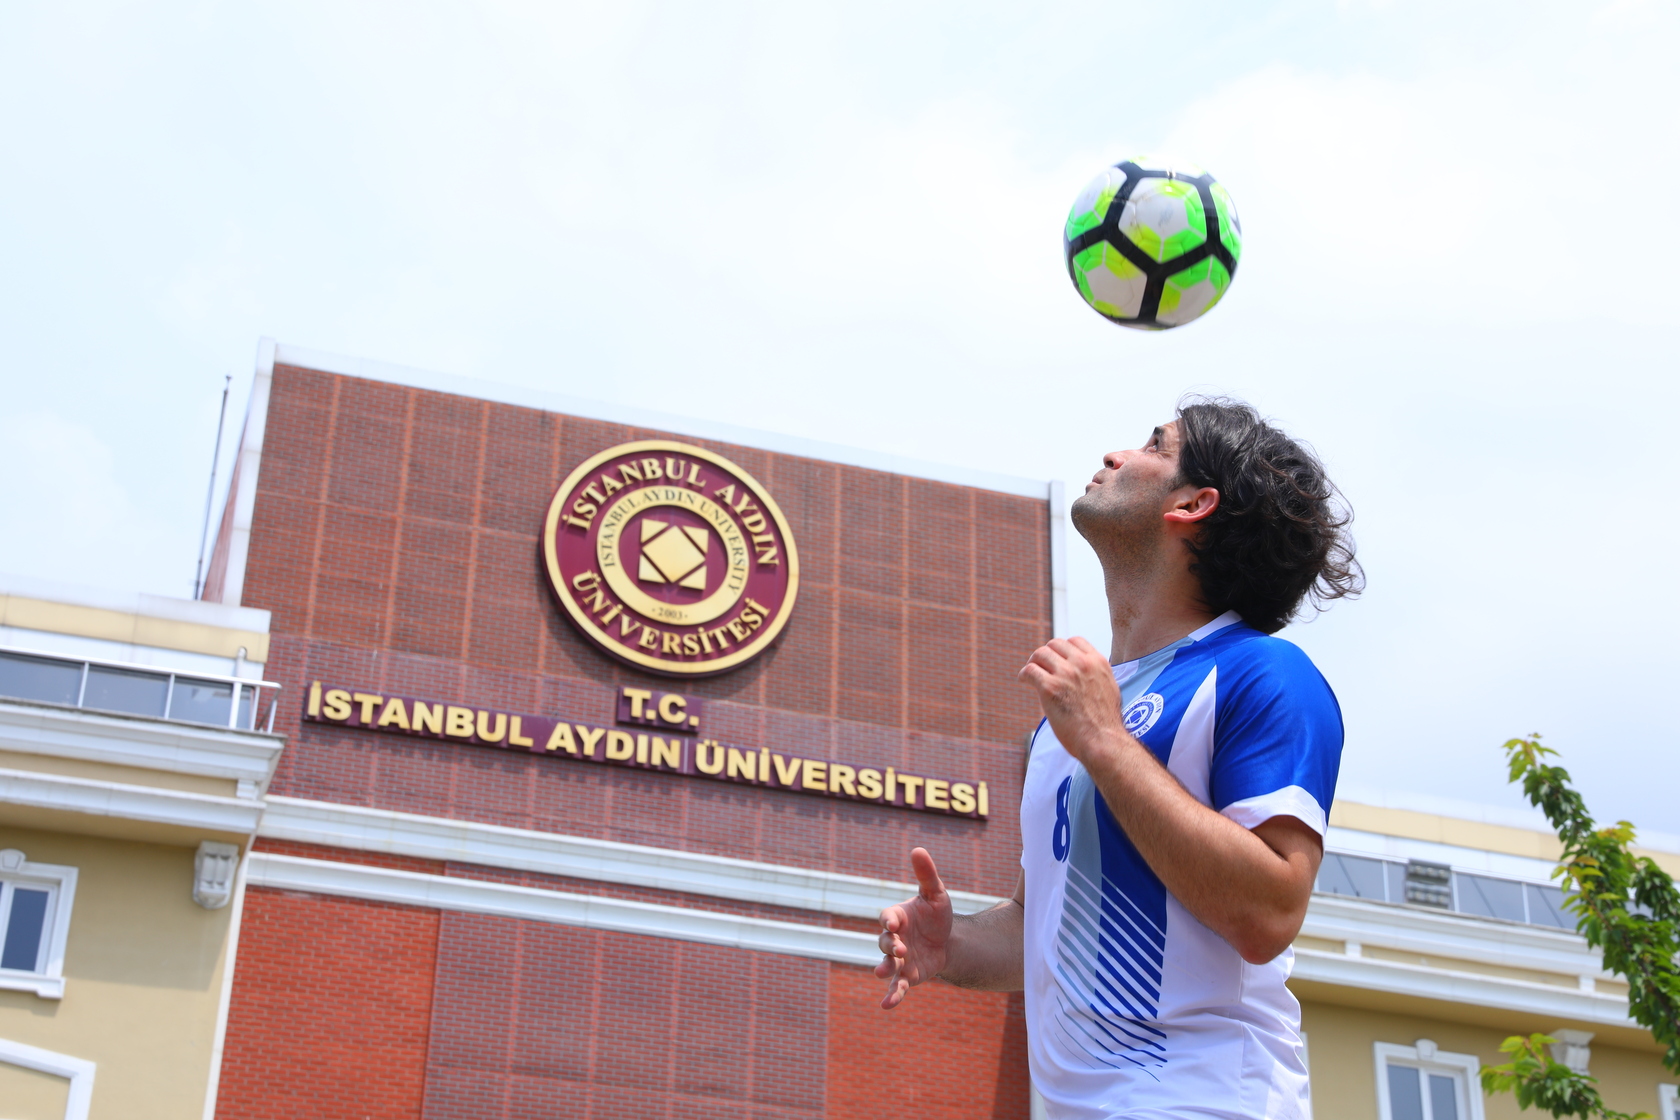 istanbul aydin universitesi find and study 17 - Istanbul Aydin University